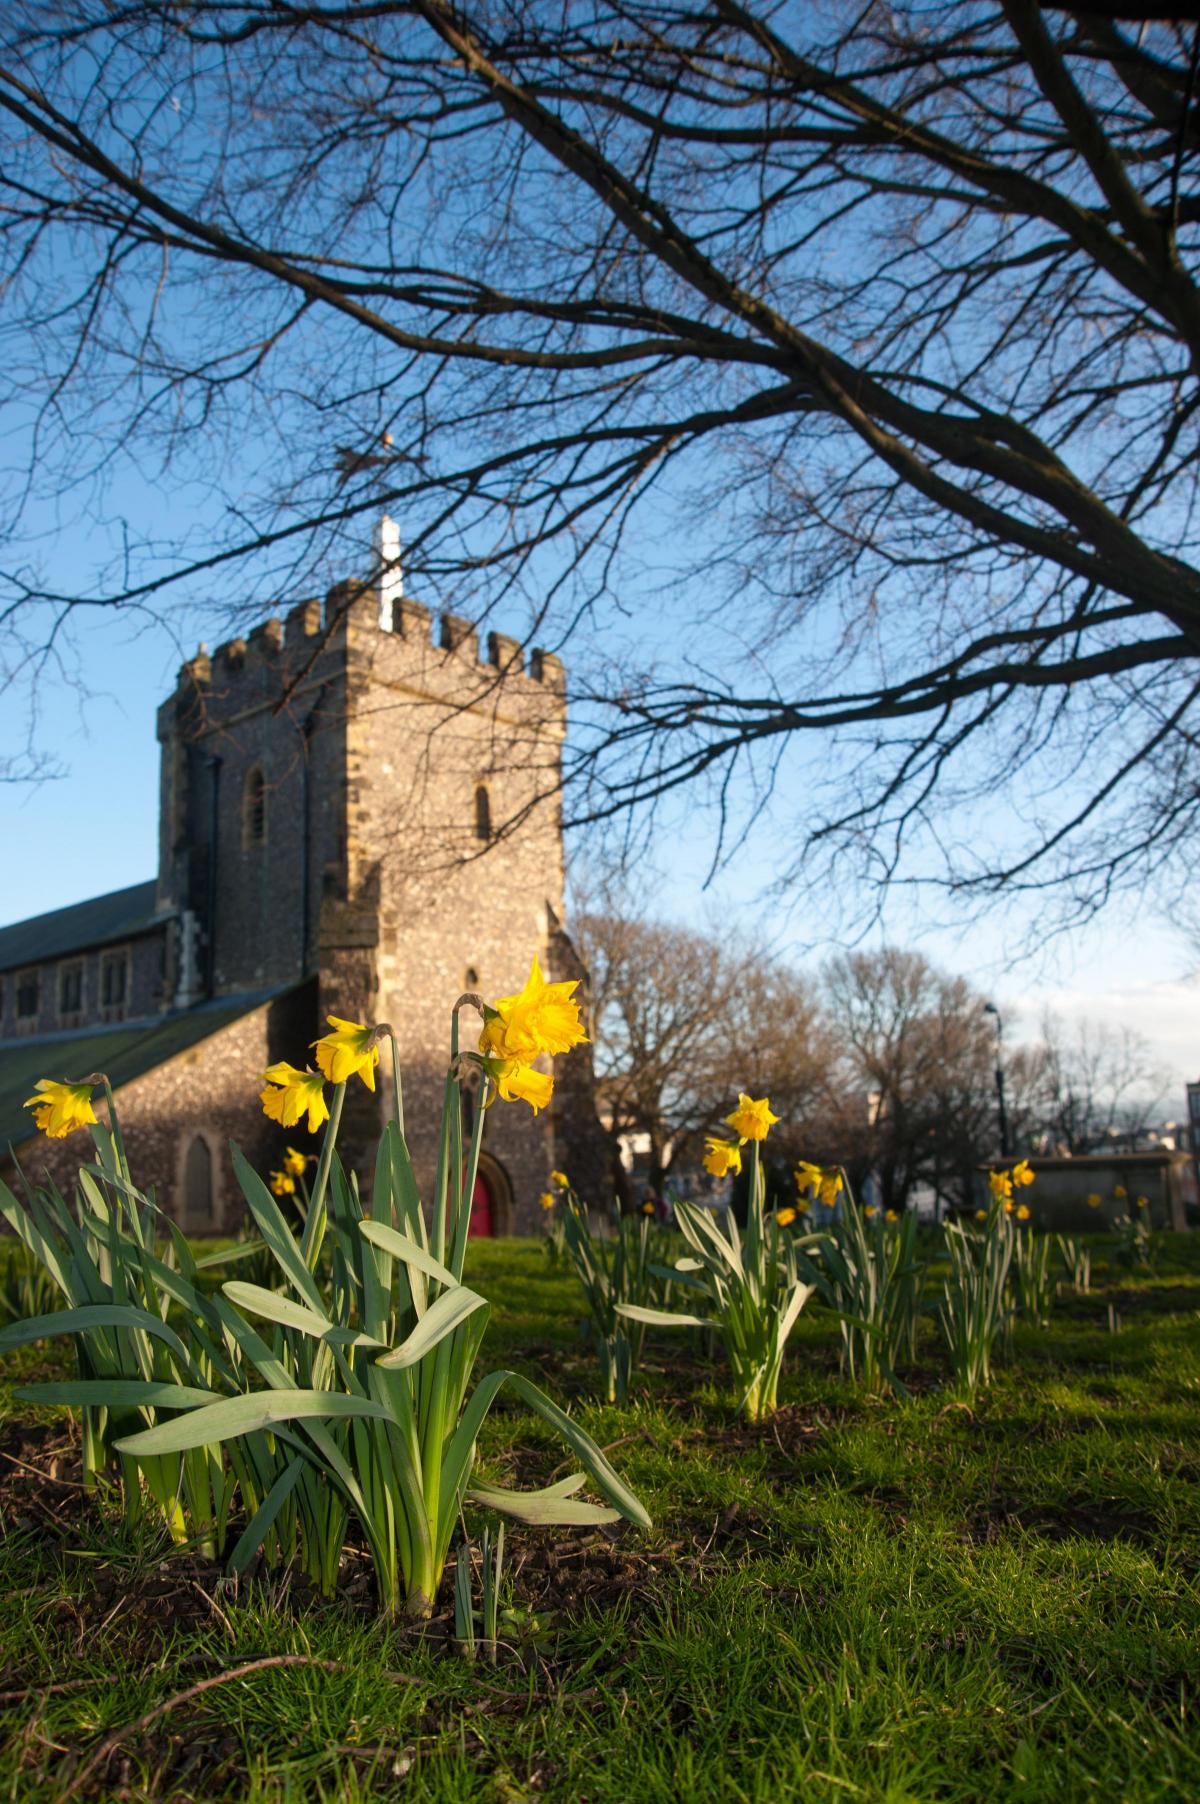 Daffodils at St Nicholas's Church, Brighton.